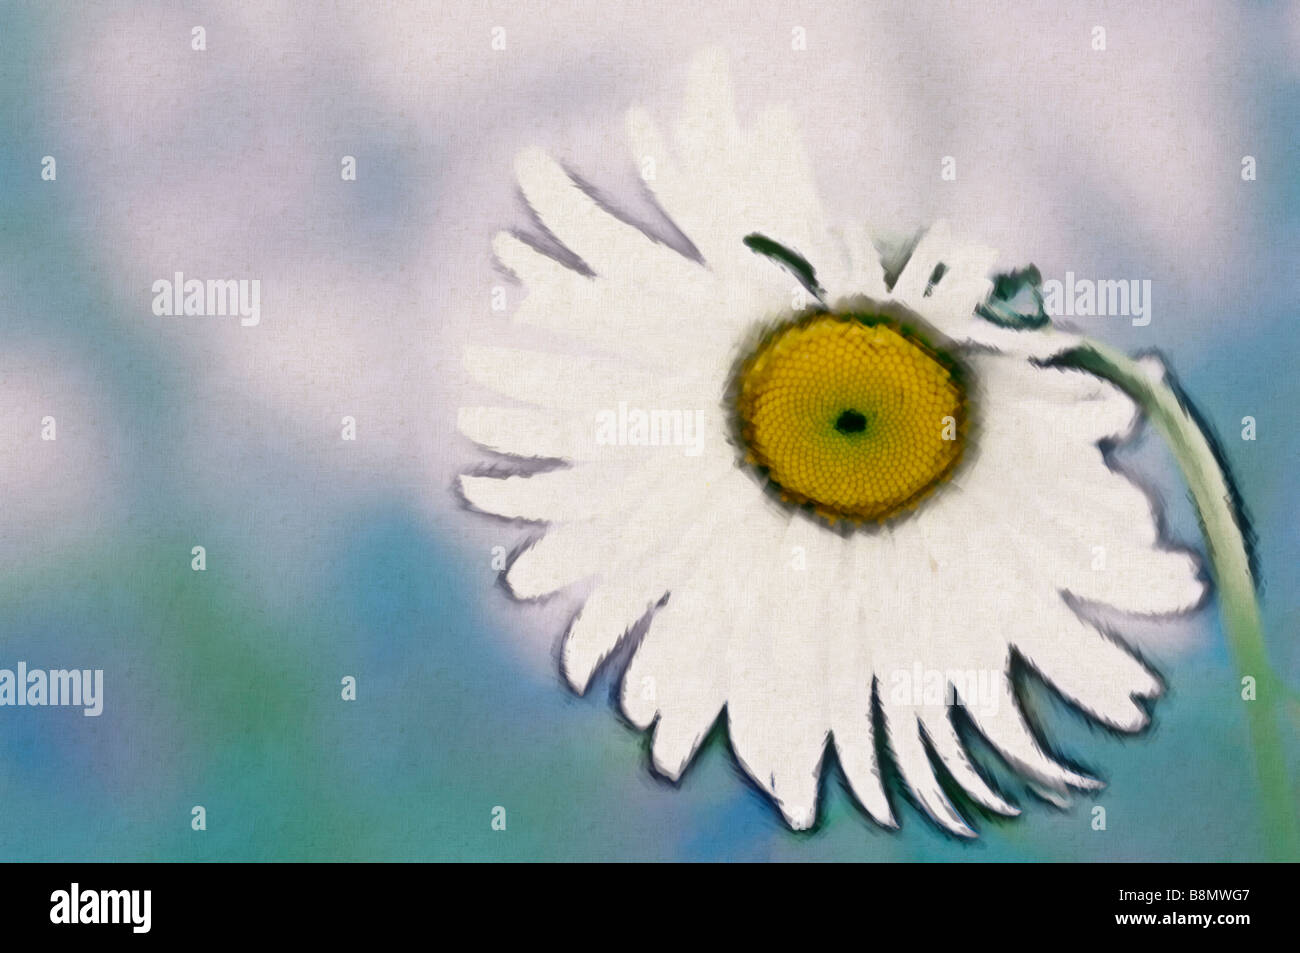 Painterly Image of White Daisy Flower Stock Photo